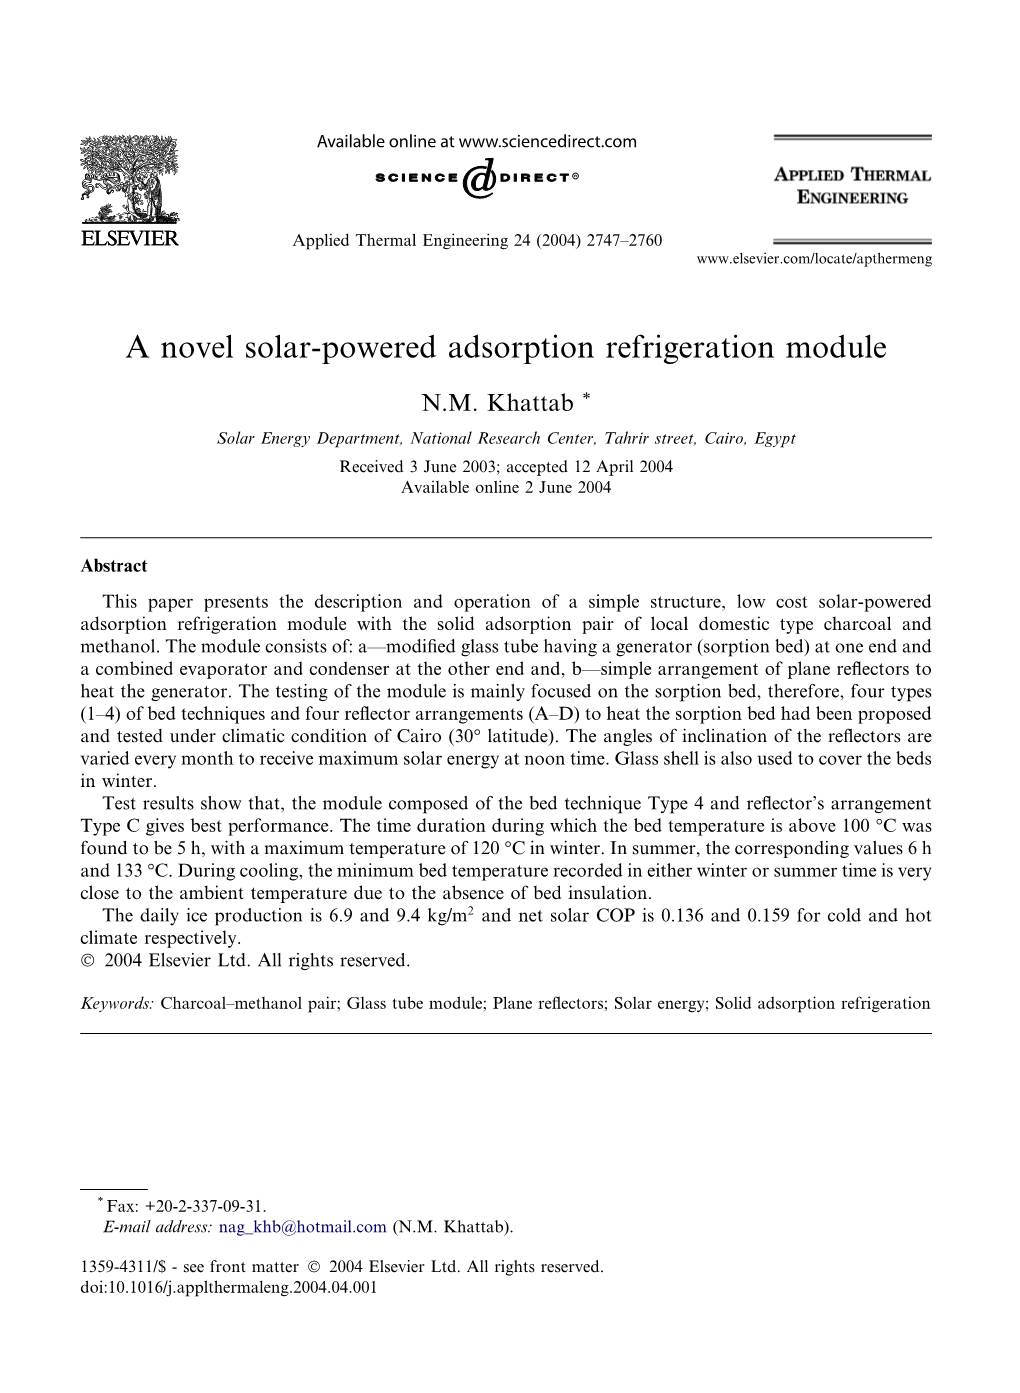 A Novel Solar-Powered Adsorption Refrigeration Module